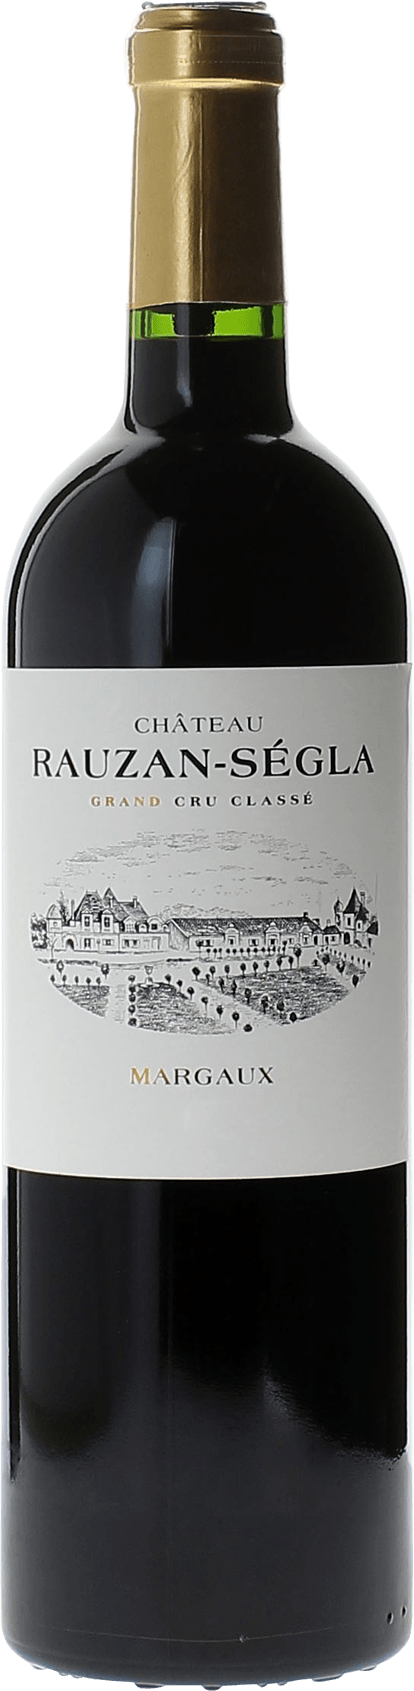 Rauzan-segla 2019 2me Grand cru class Margaux, Bordeaux rouge